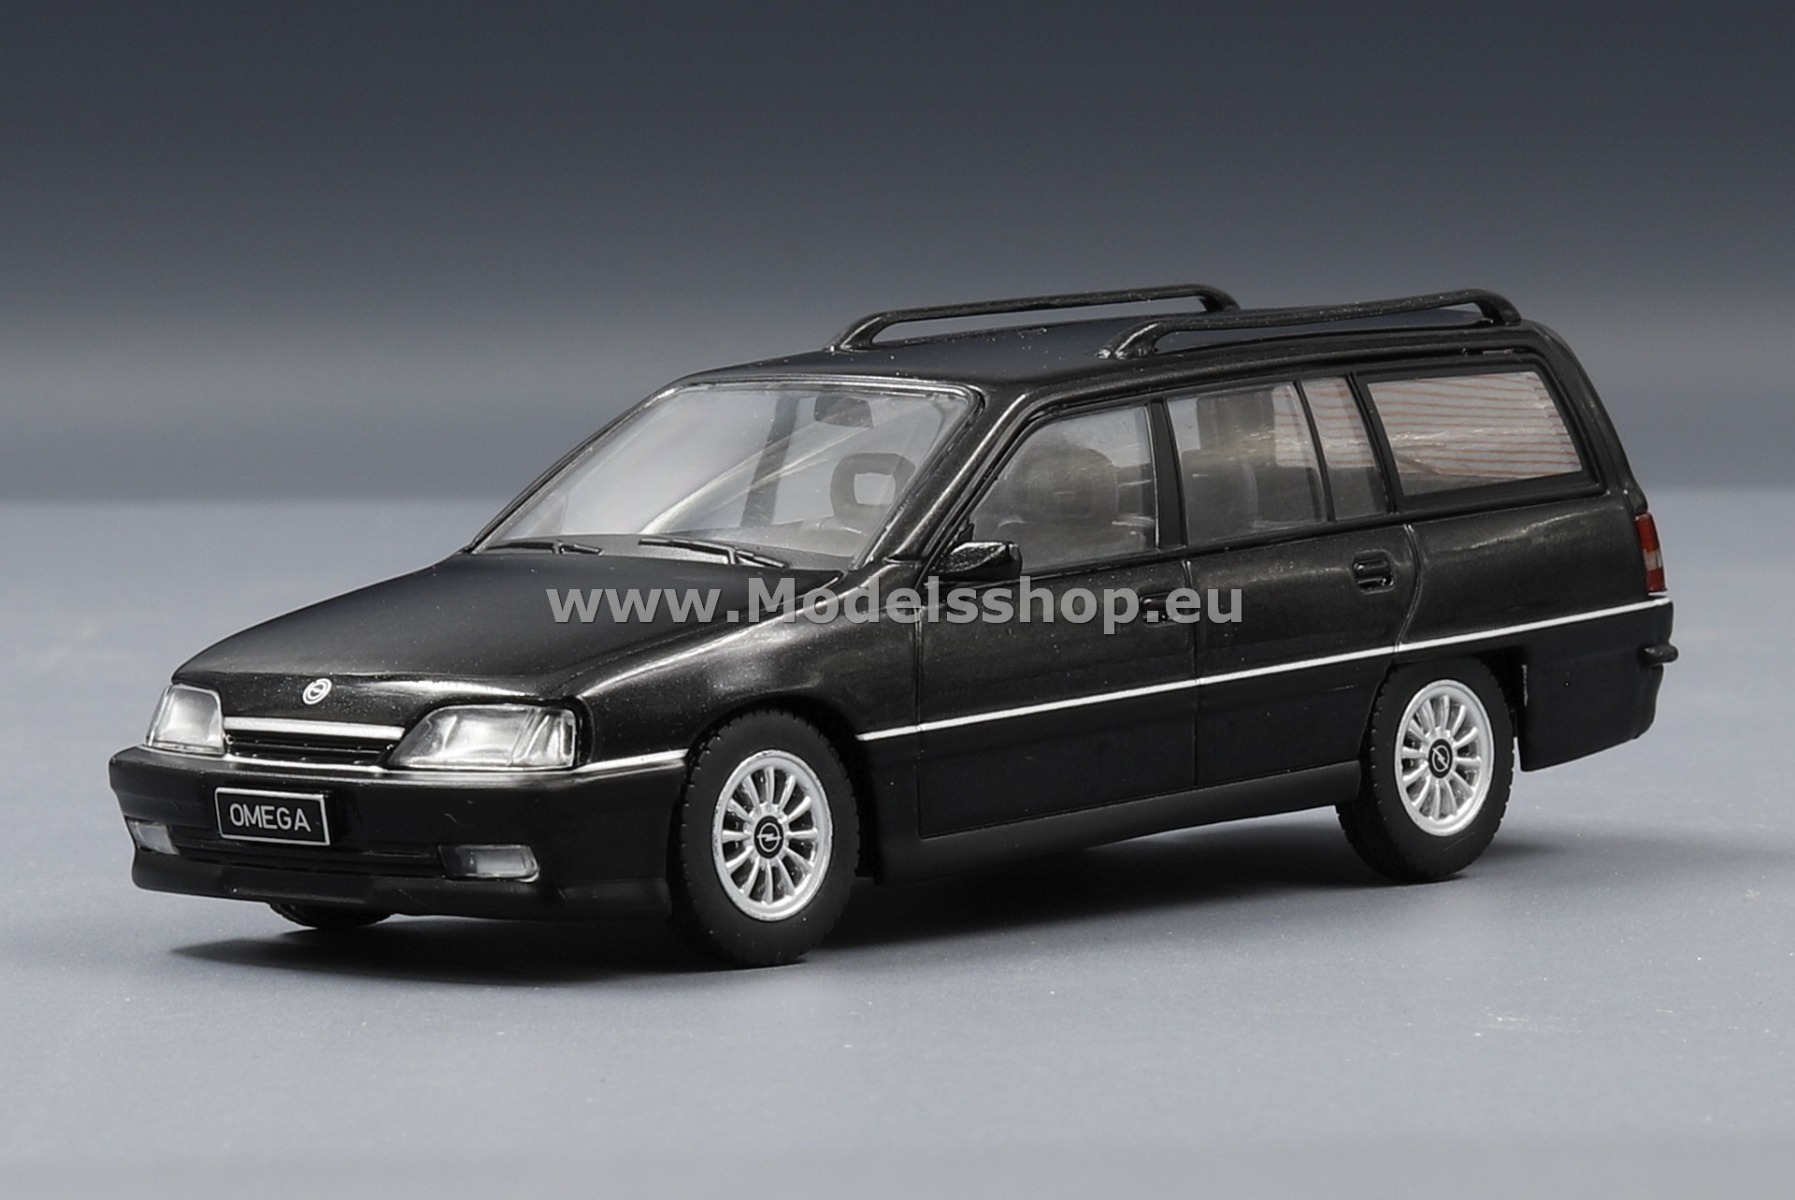 IXOCLC444N.22 Opel Omega A2 Caravan, 1990 /black/